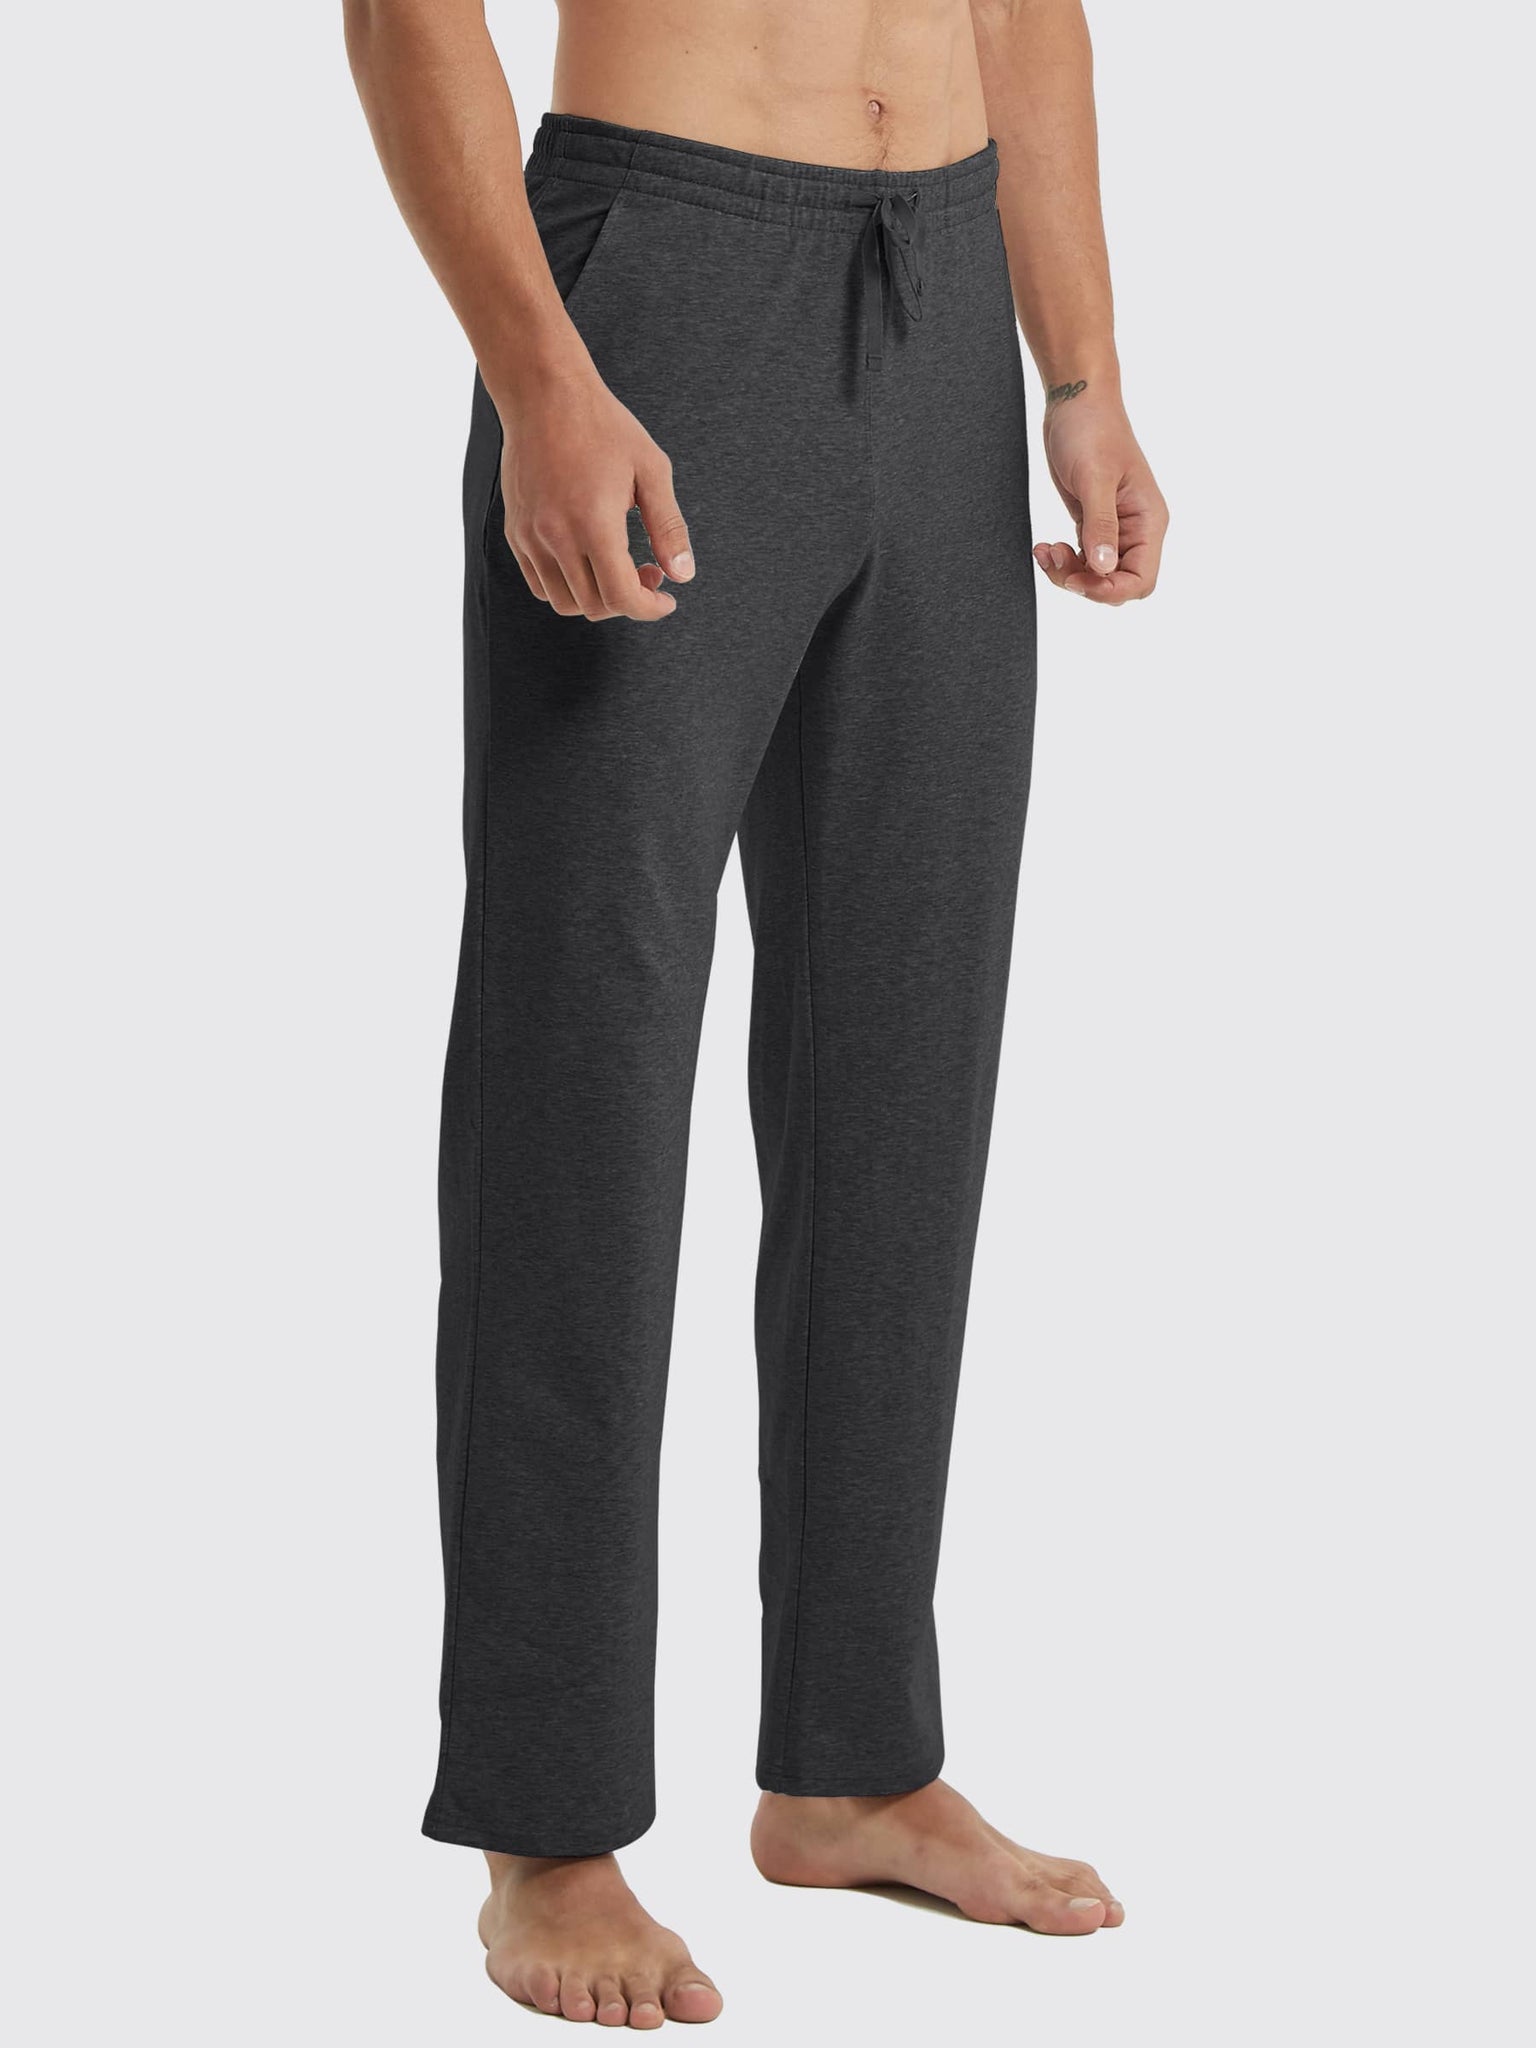 Men's Cotton Yoga Balance Sweatpants_Gray_model2